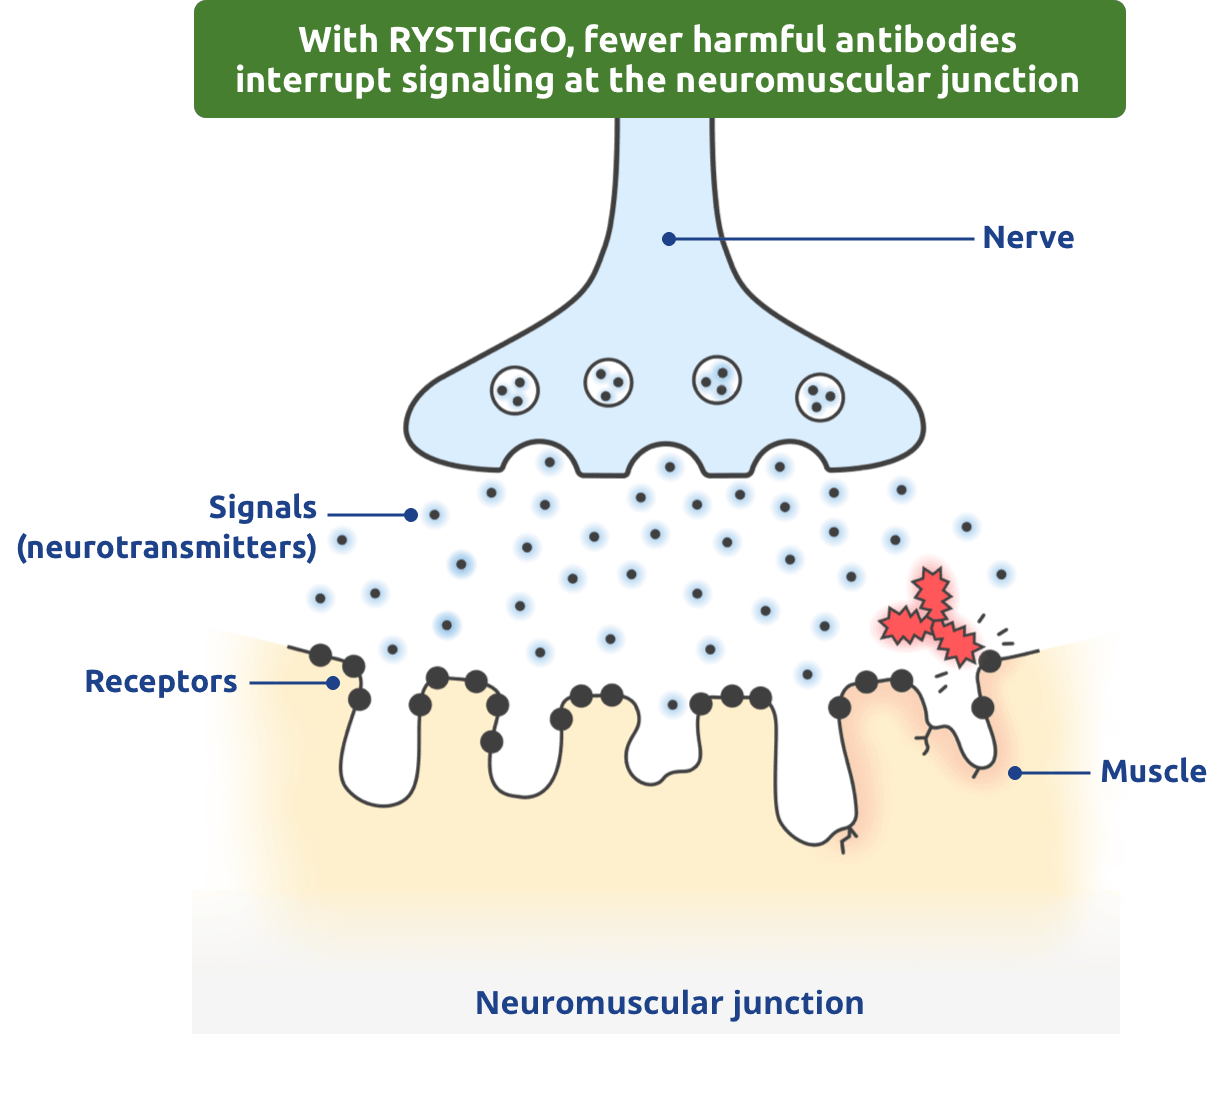 With RYSTIGGO, fewer harmful antibodies interrupt signaling at the neuromuscular junction.